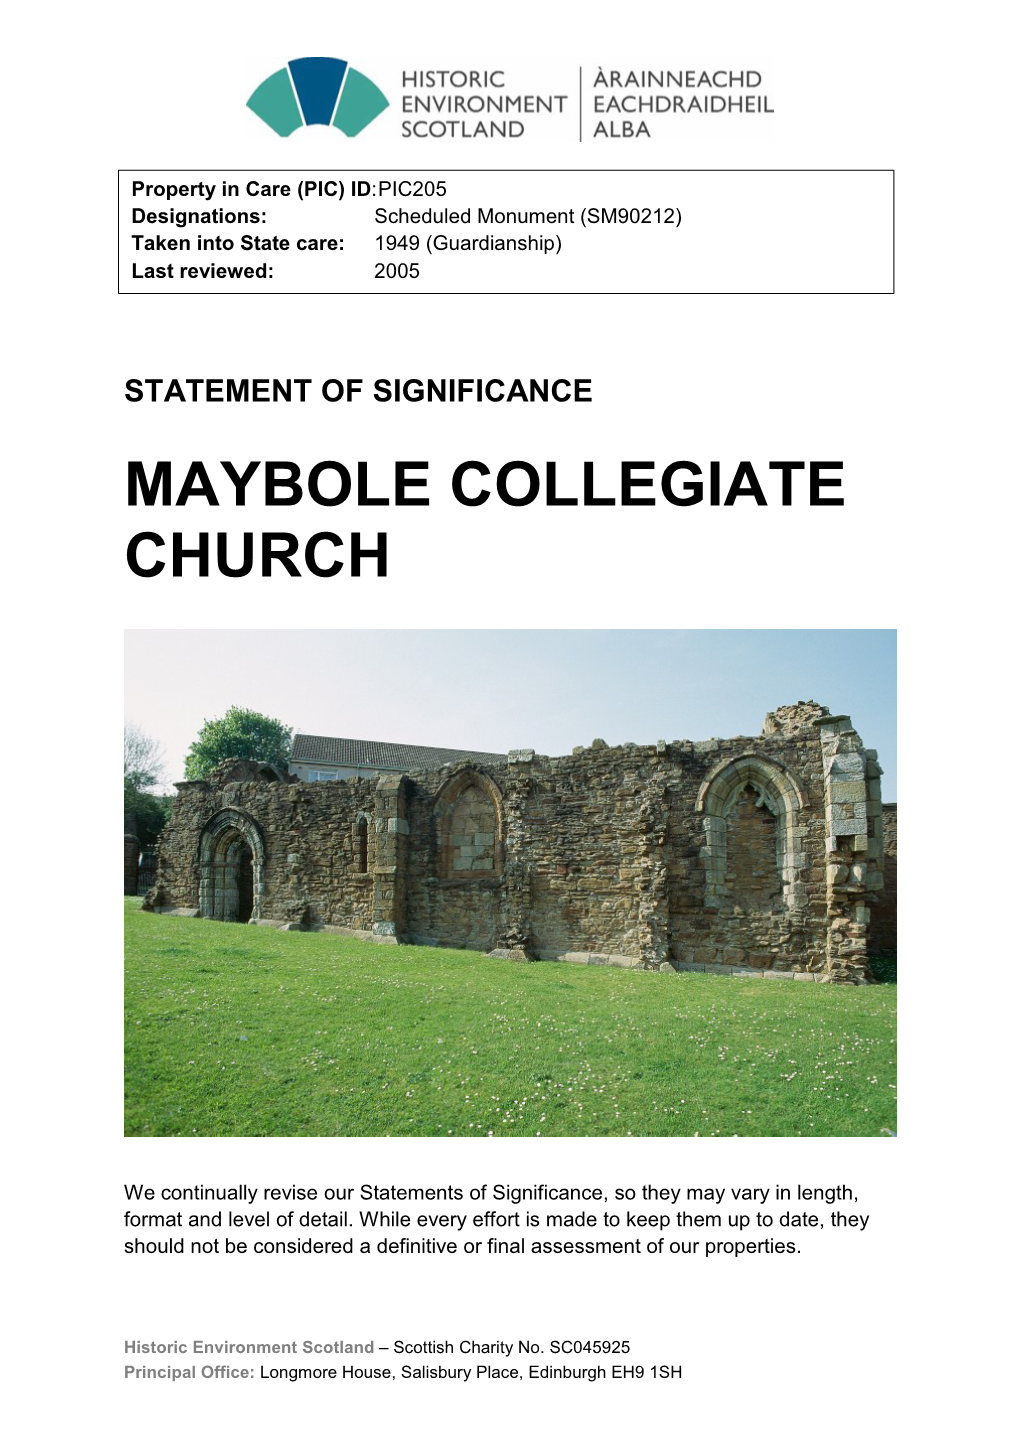 Maybole Collegiate Church Statement of Significance